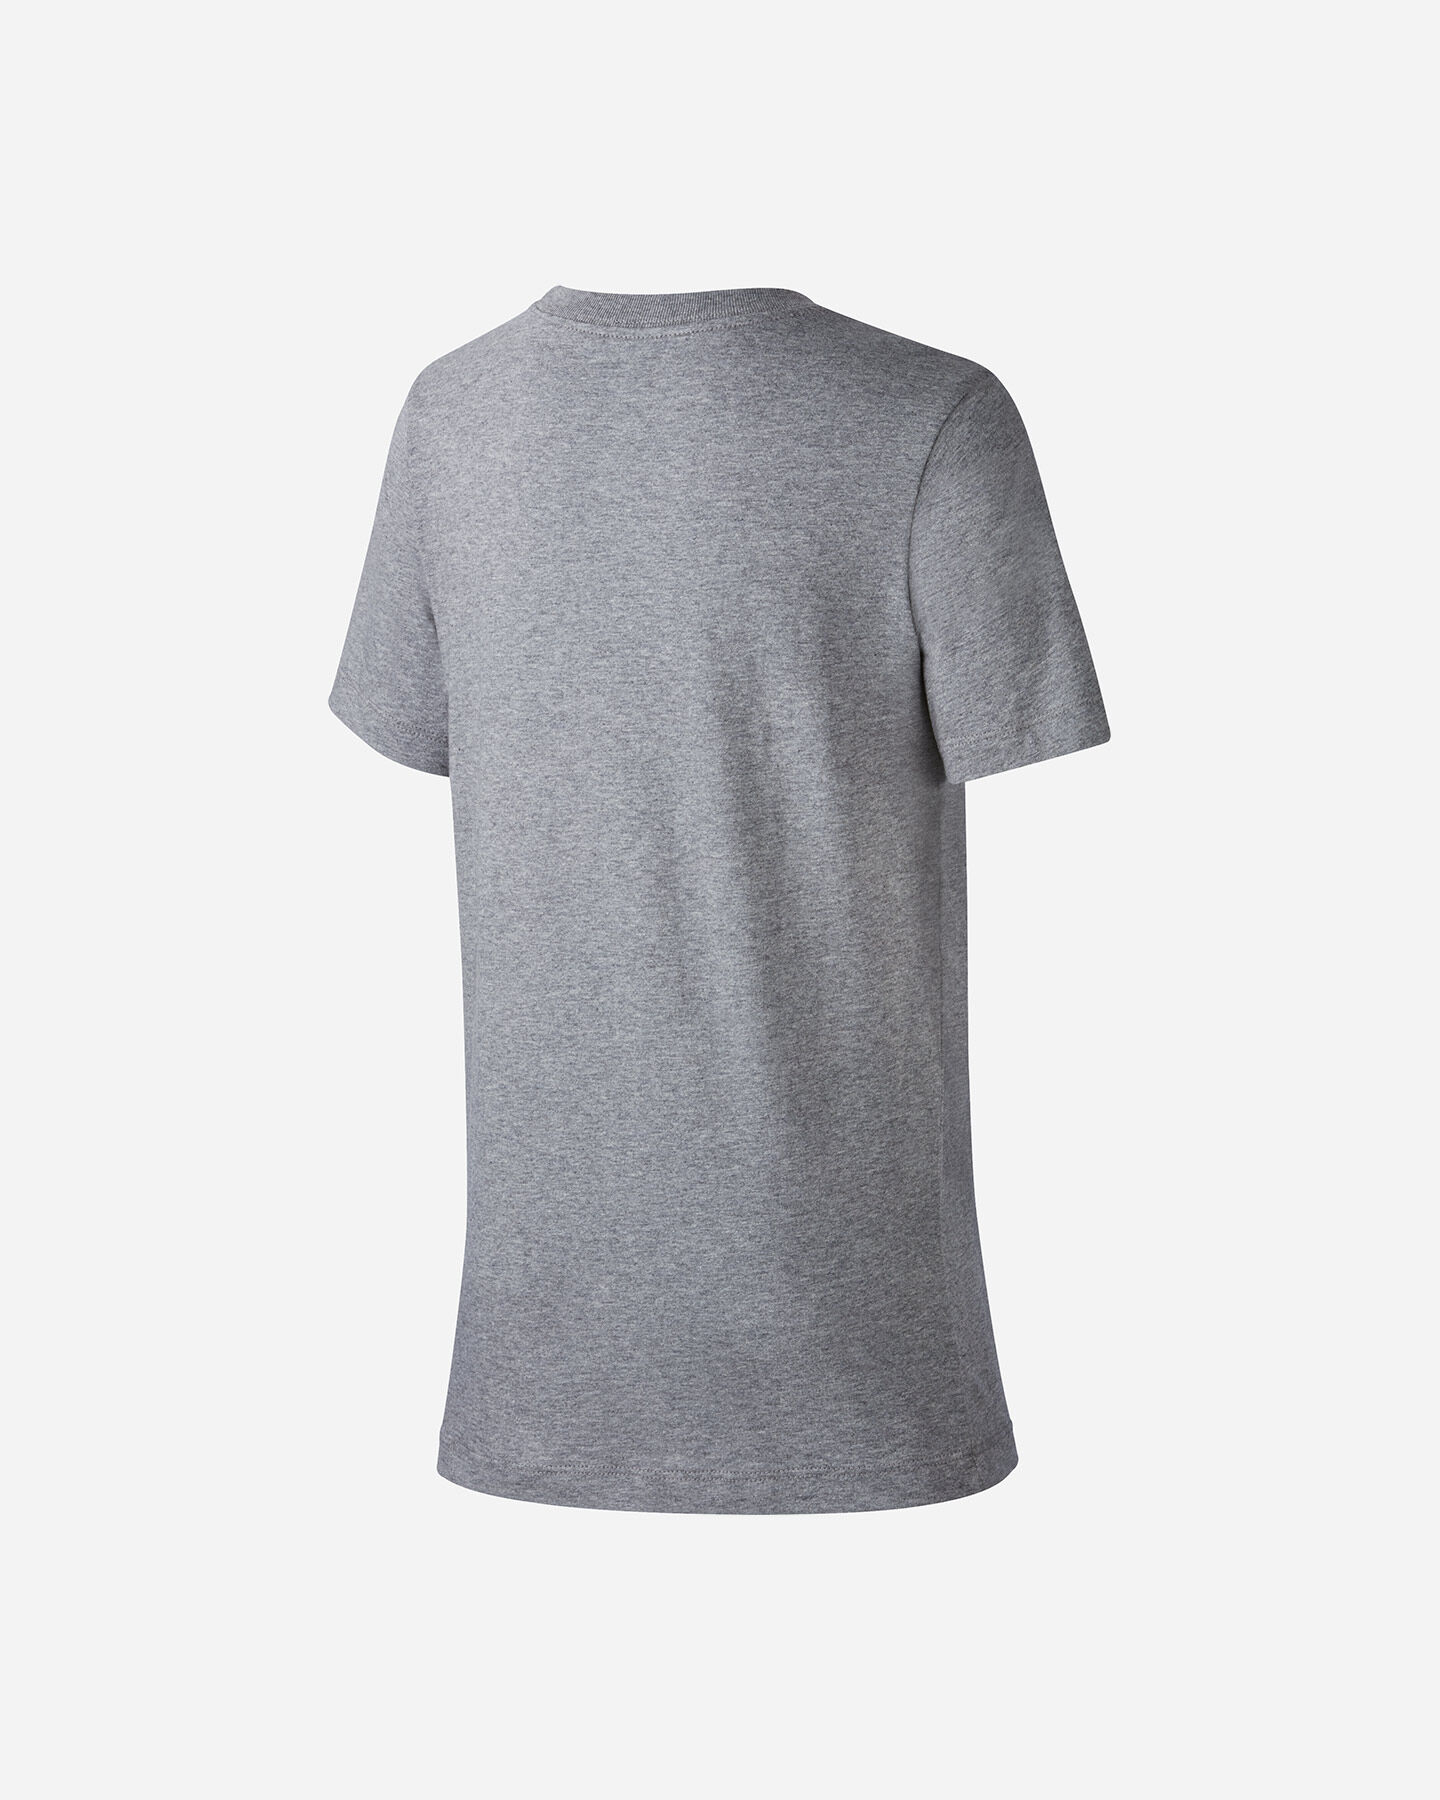  T-Shirt NIKE LOGO JR S5162701|091|S scatto 1